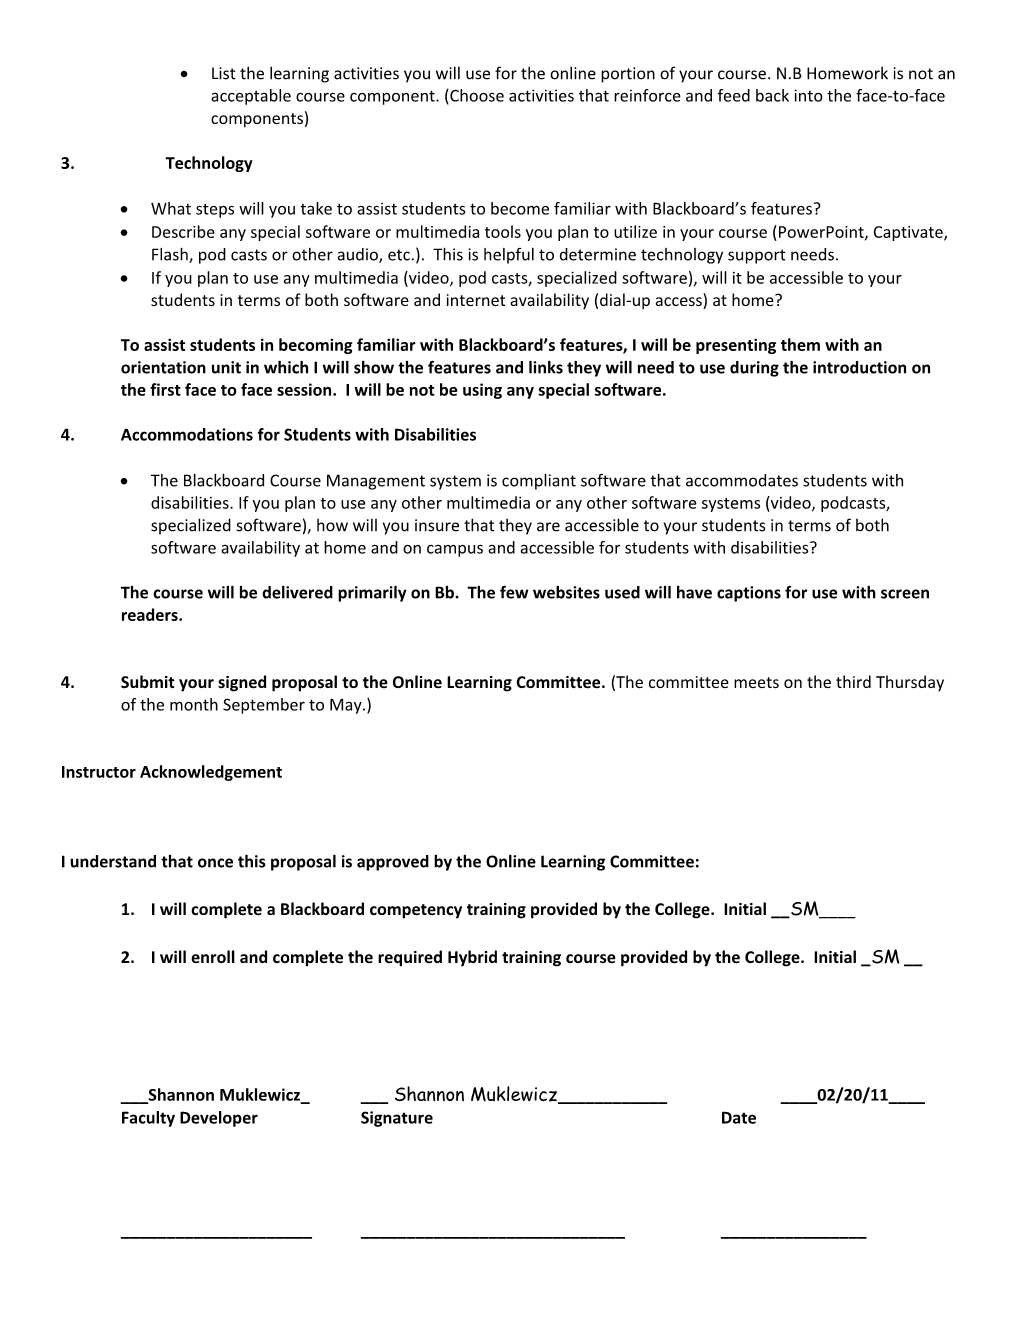 Hybrid Course Proposal Form